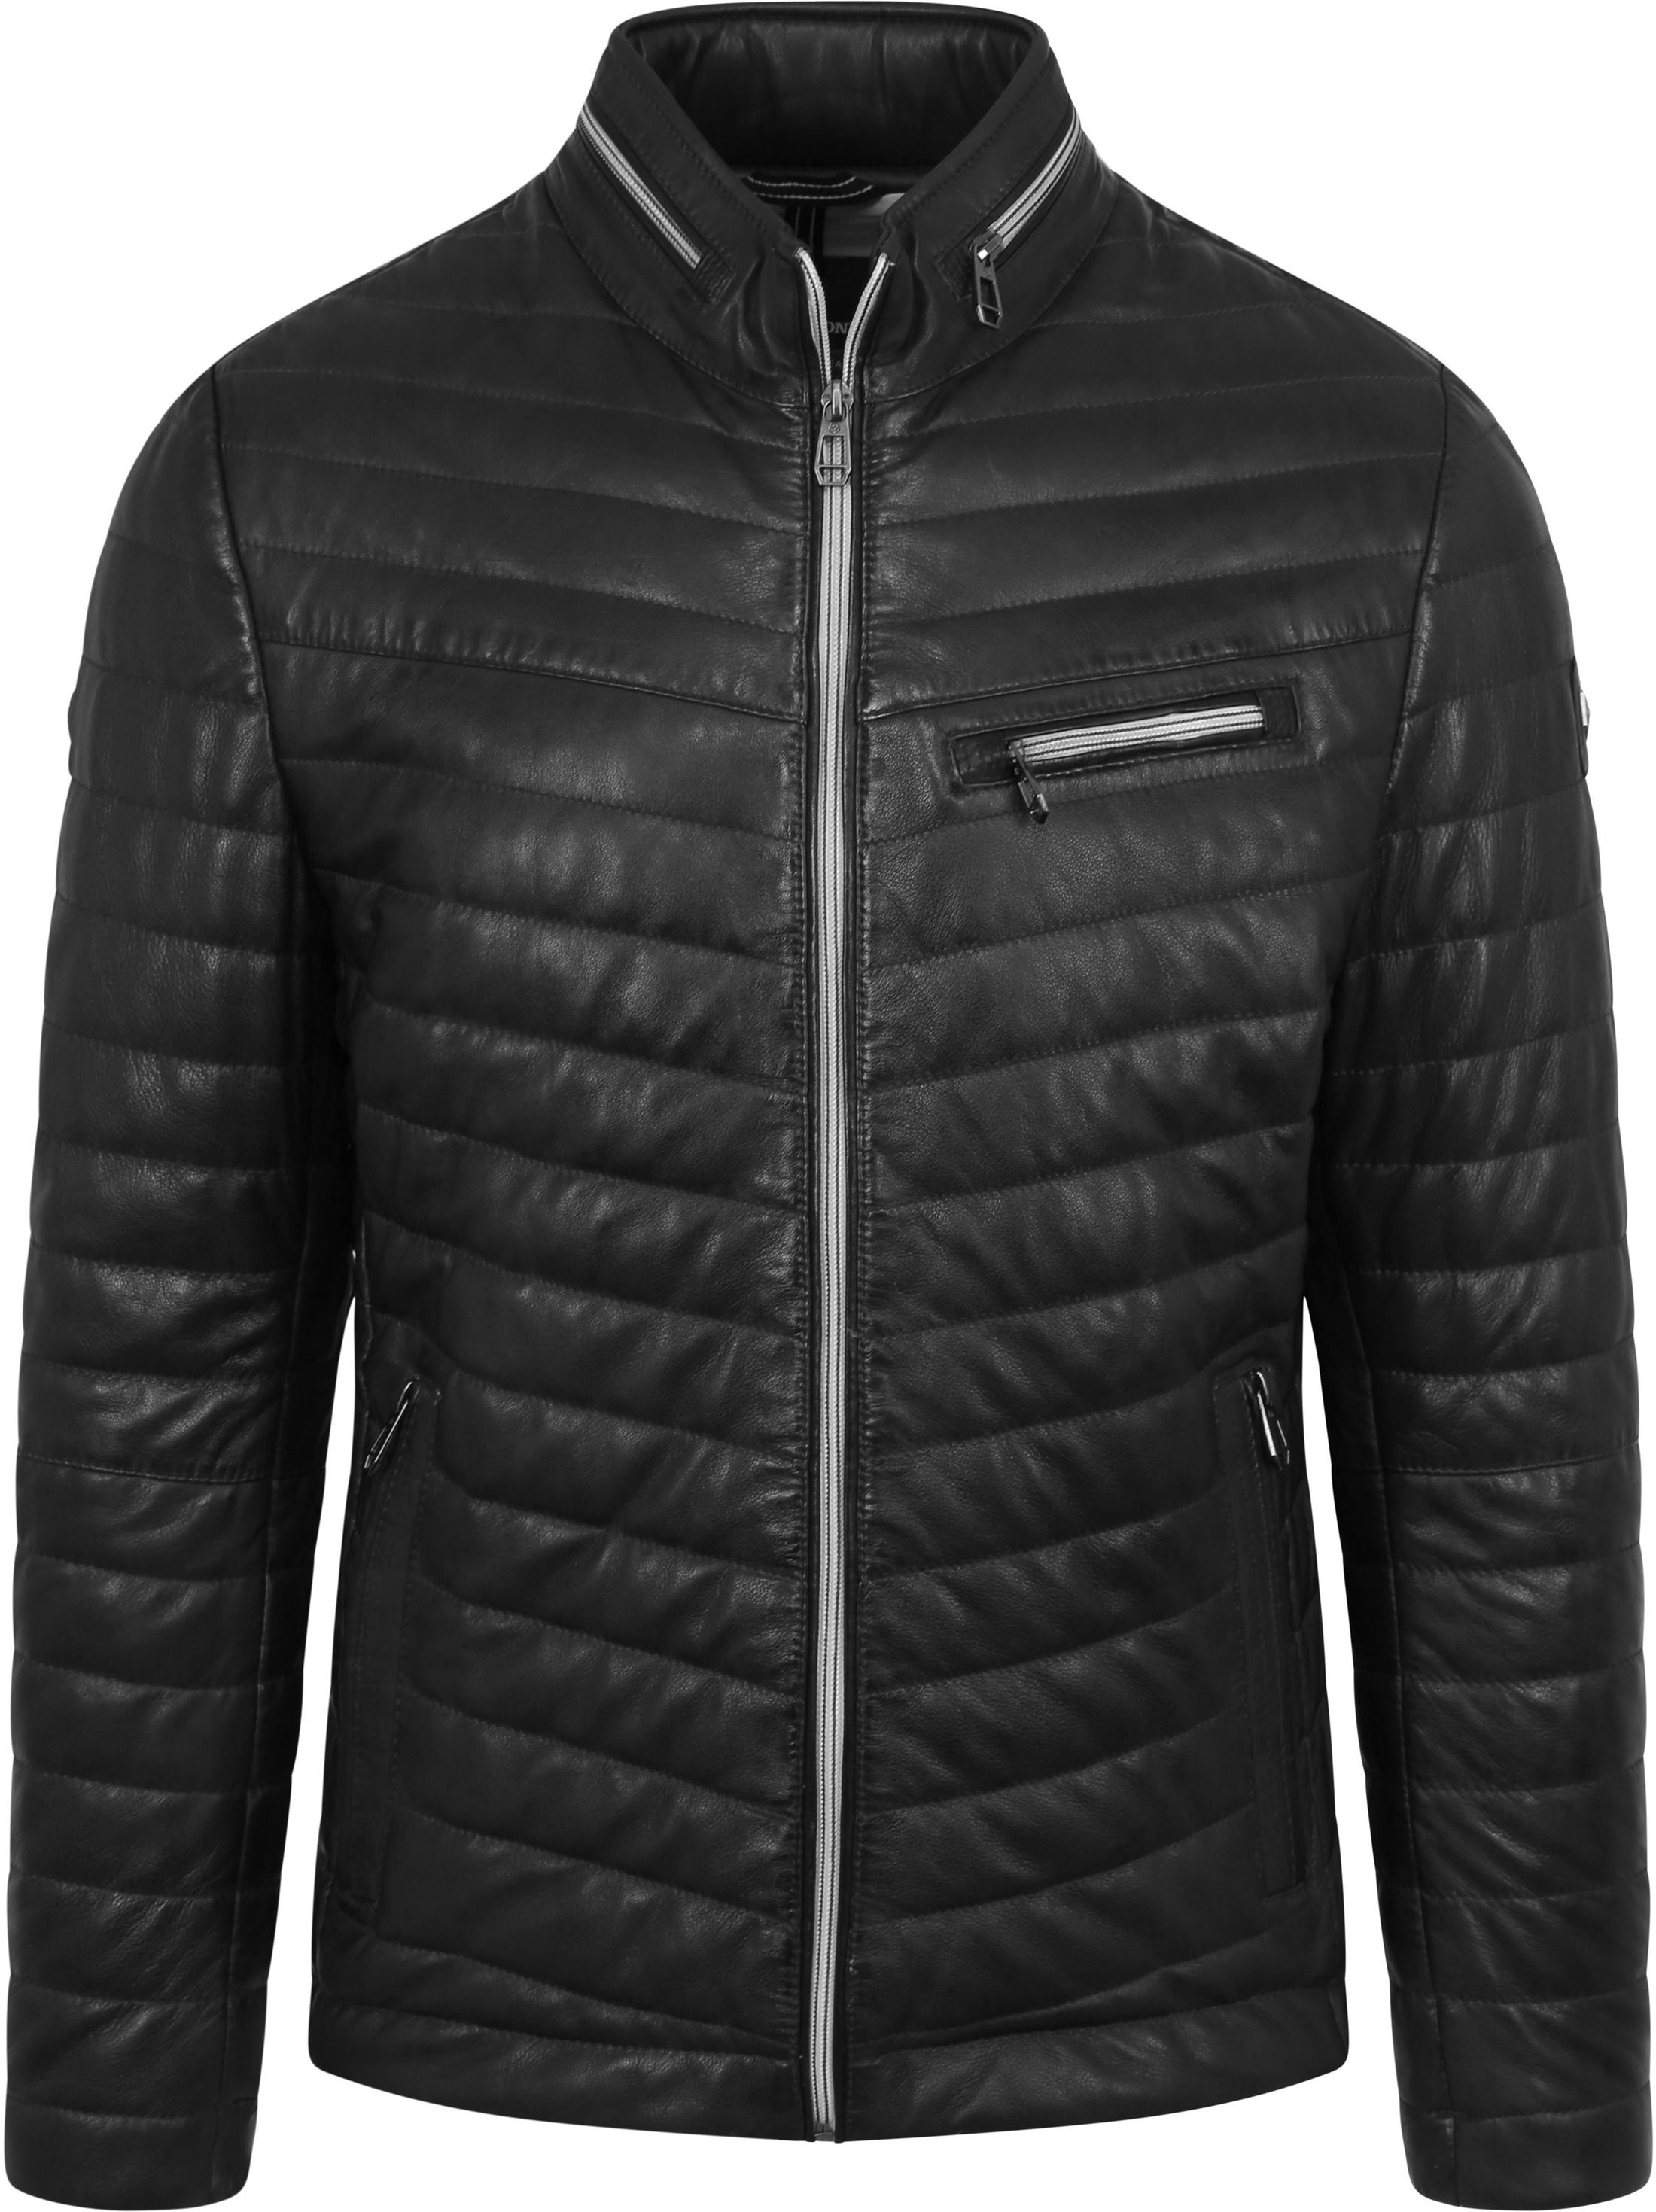 Milestone Damiano Leather Jacket Black size 44-R